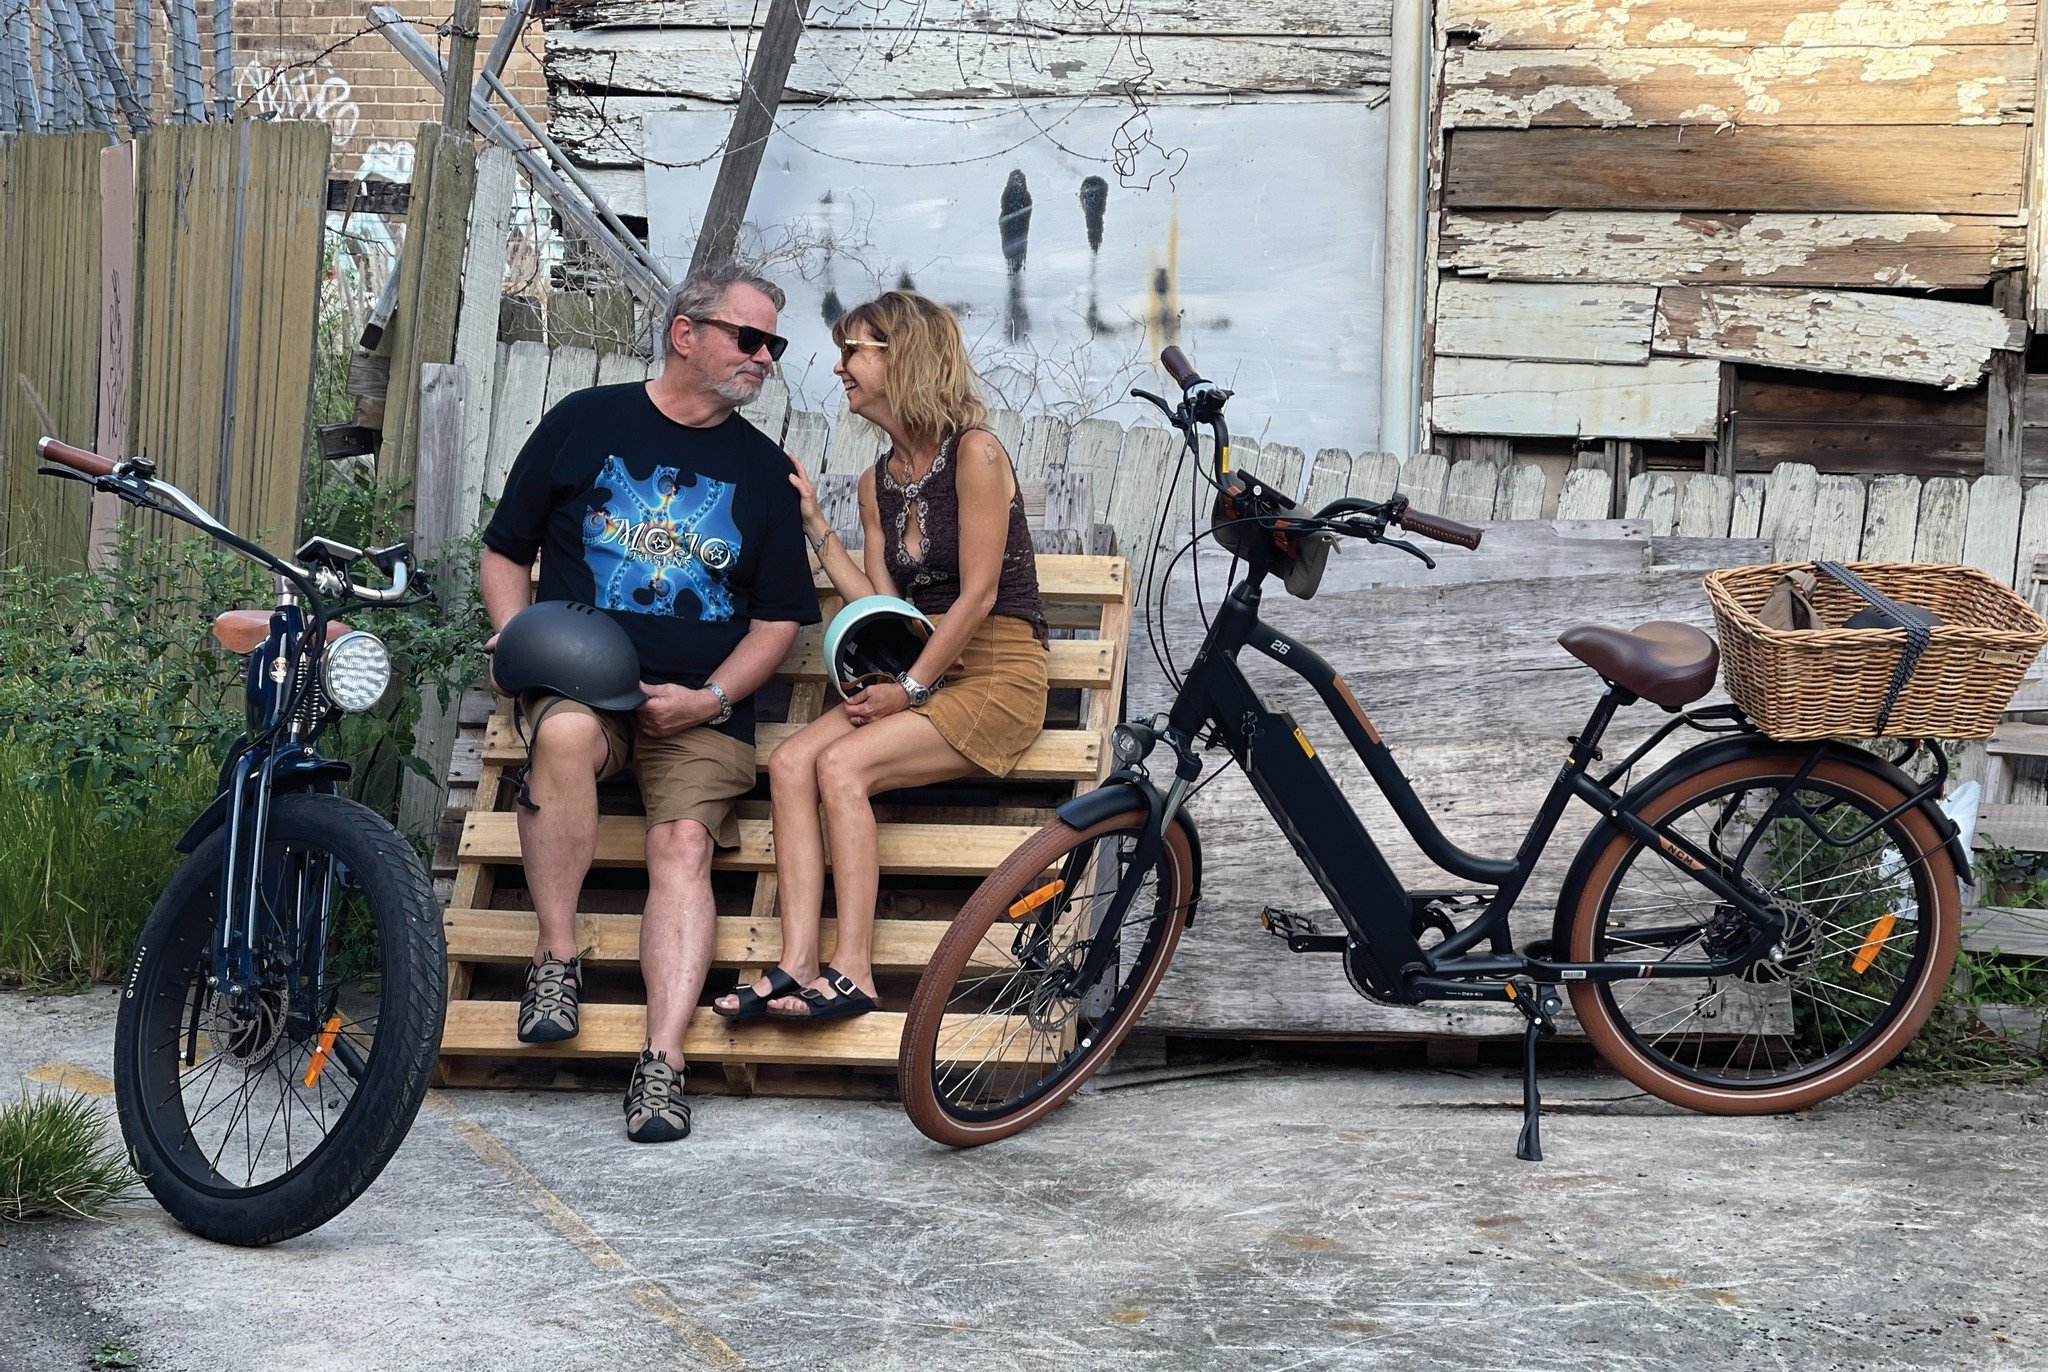 E-Bike freedom to explore at @energyelectricbikes �
🚴 Bikes for every budget 
🚴 Mountain E-bikes
🚴 Cruiser E-bikes
🚴 Commuter E-bikes
🚴 Dirodi Rover Specialists

++++

 #northernbeachesbusiness #northernbeachesmums #LoveLocalBusiness #lovelocal 